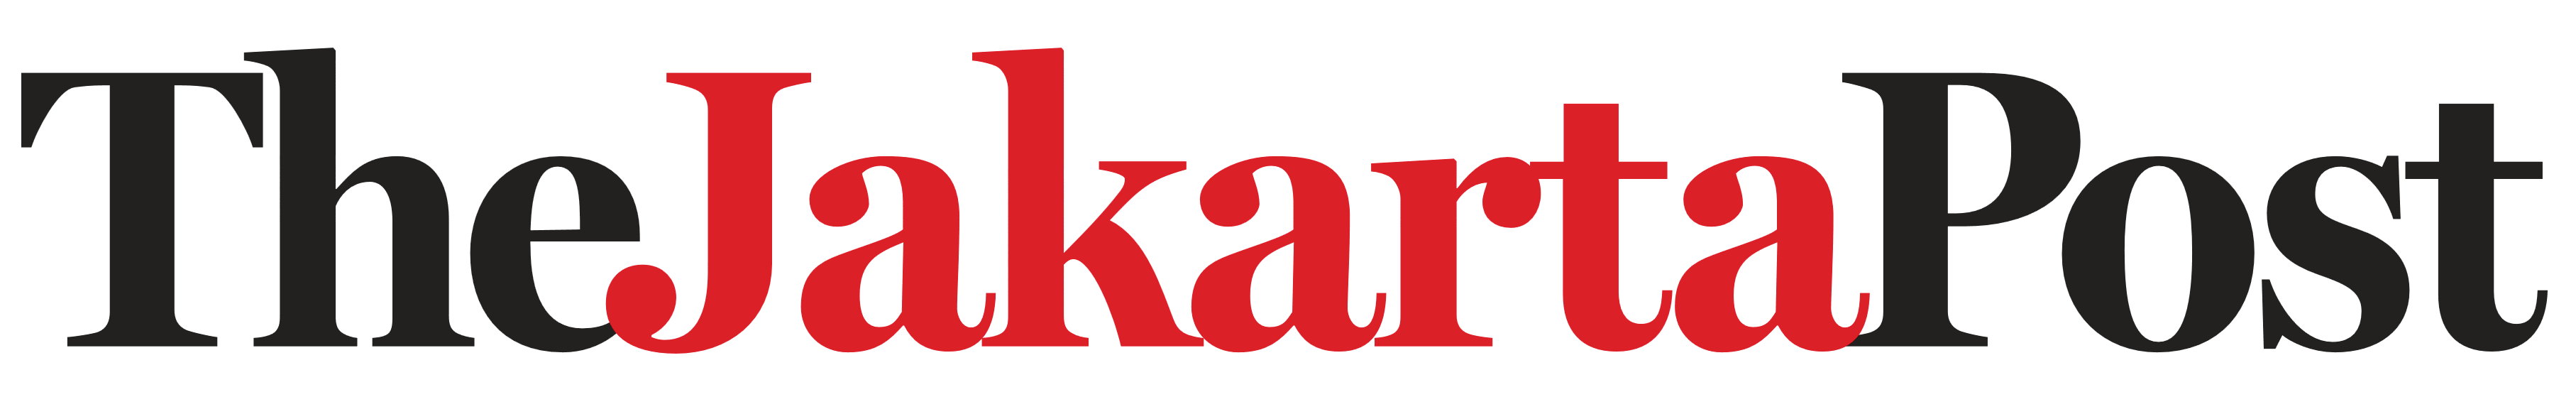 The Jakarta Post logo, logotype